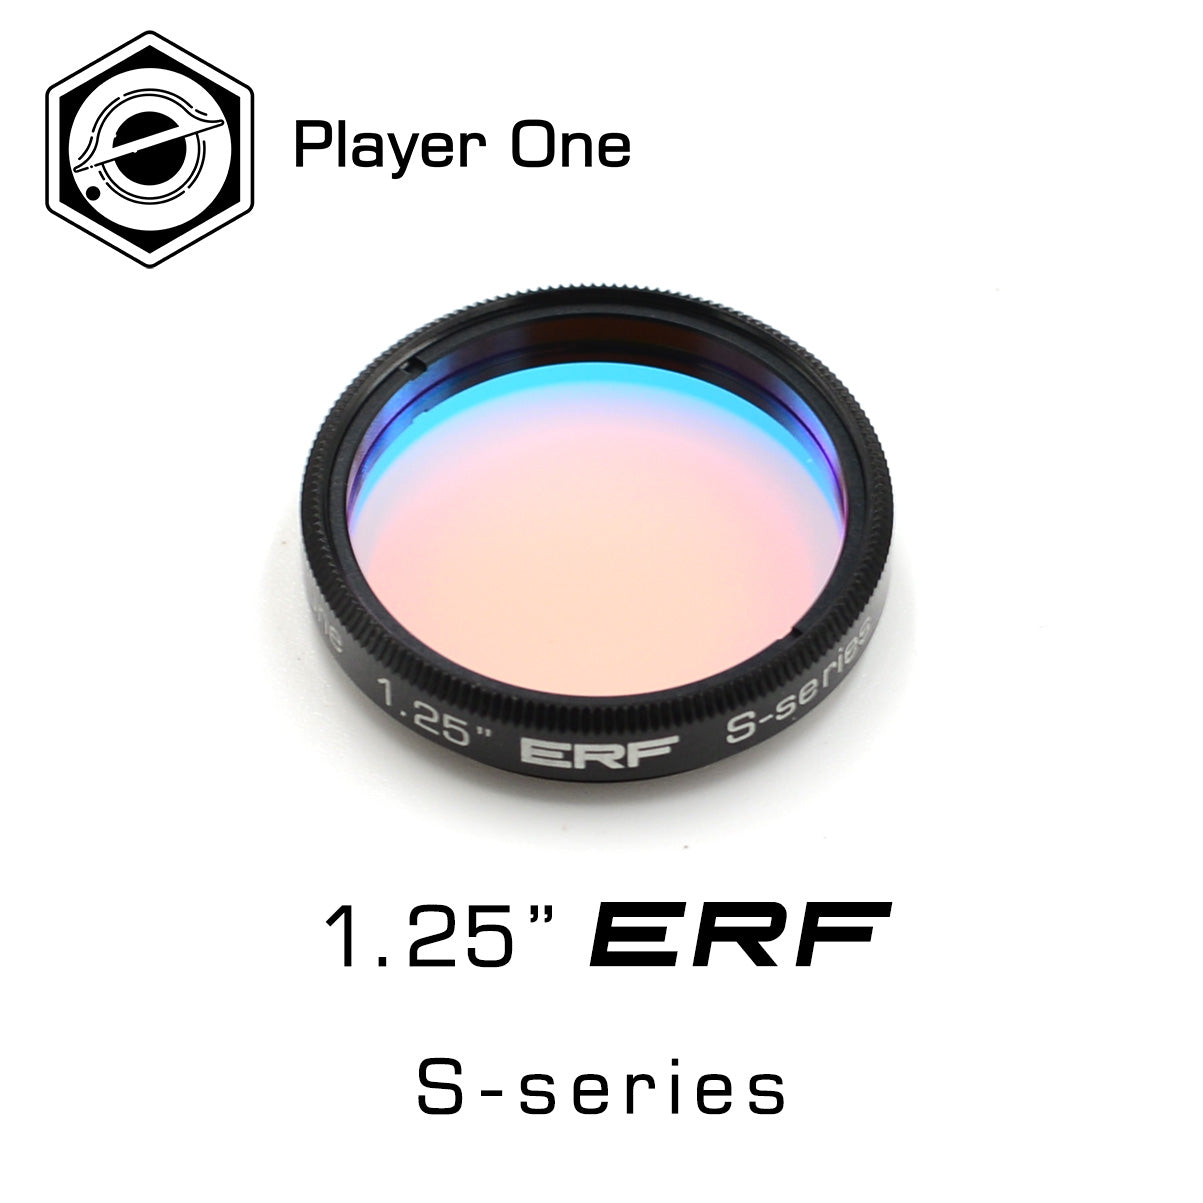 Player One S-Series 1.25 inch ERF Filter - Dark Clear Skies